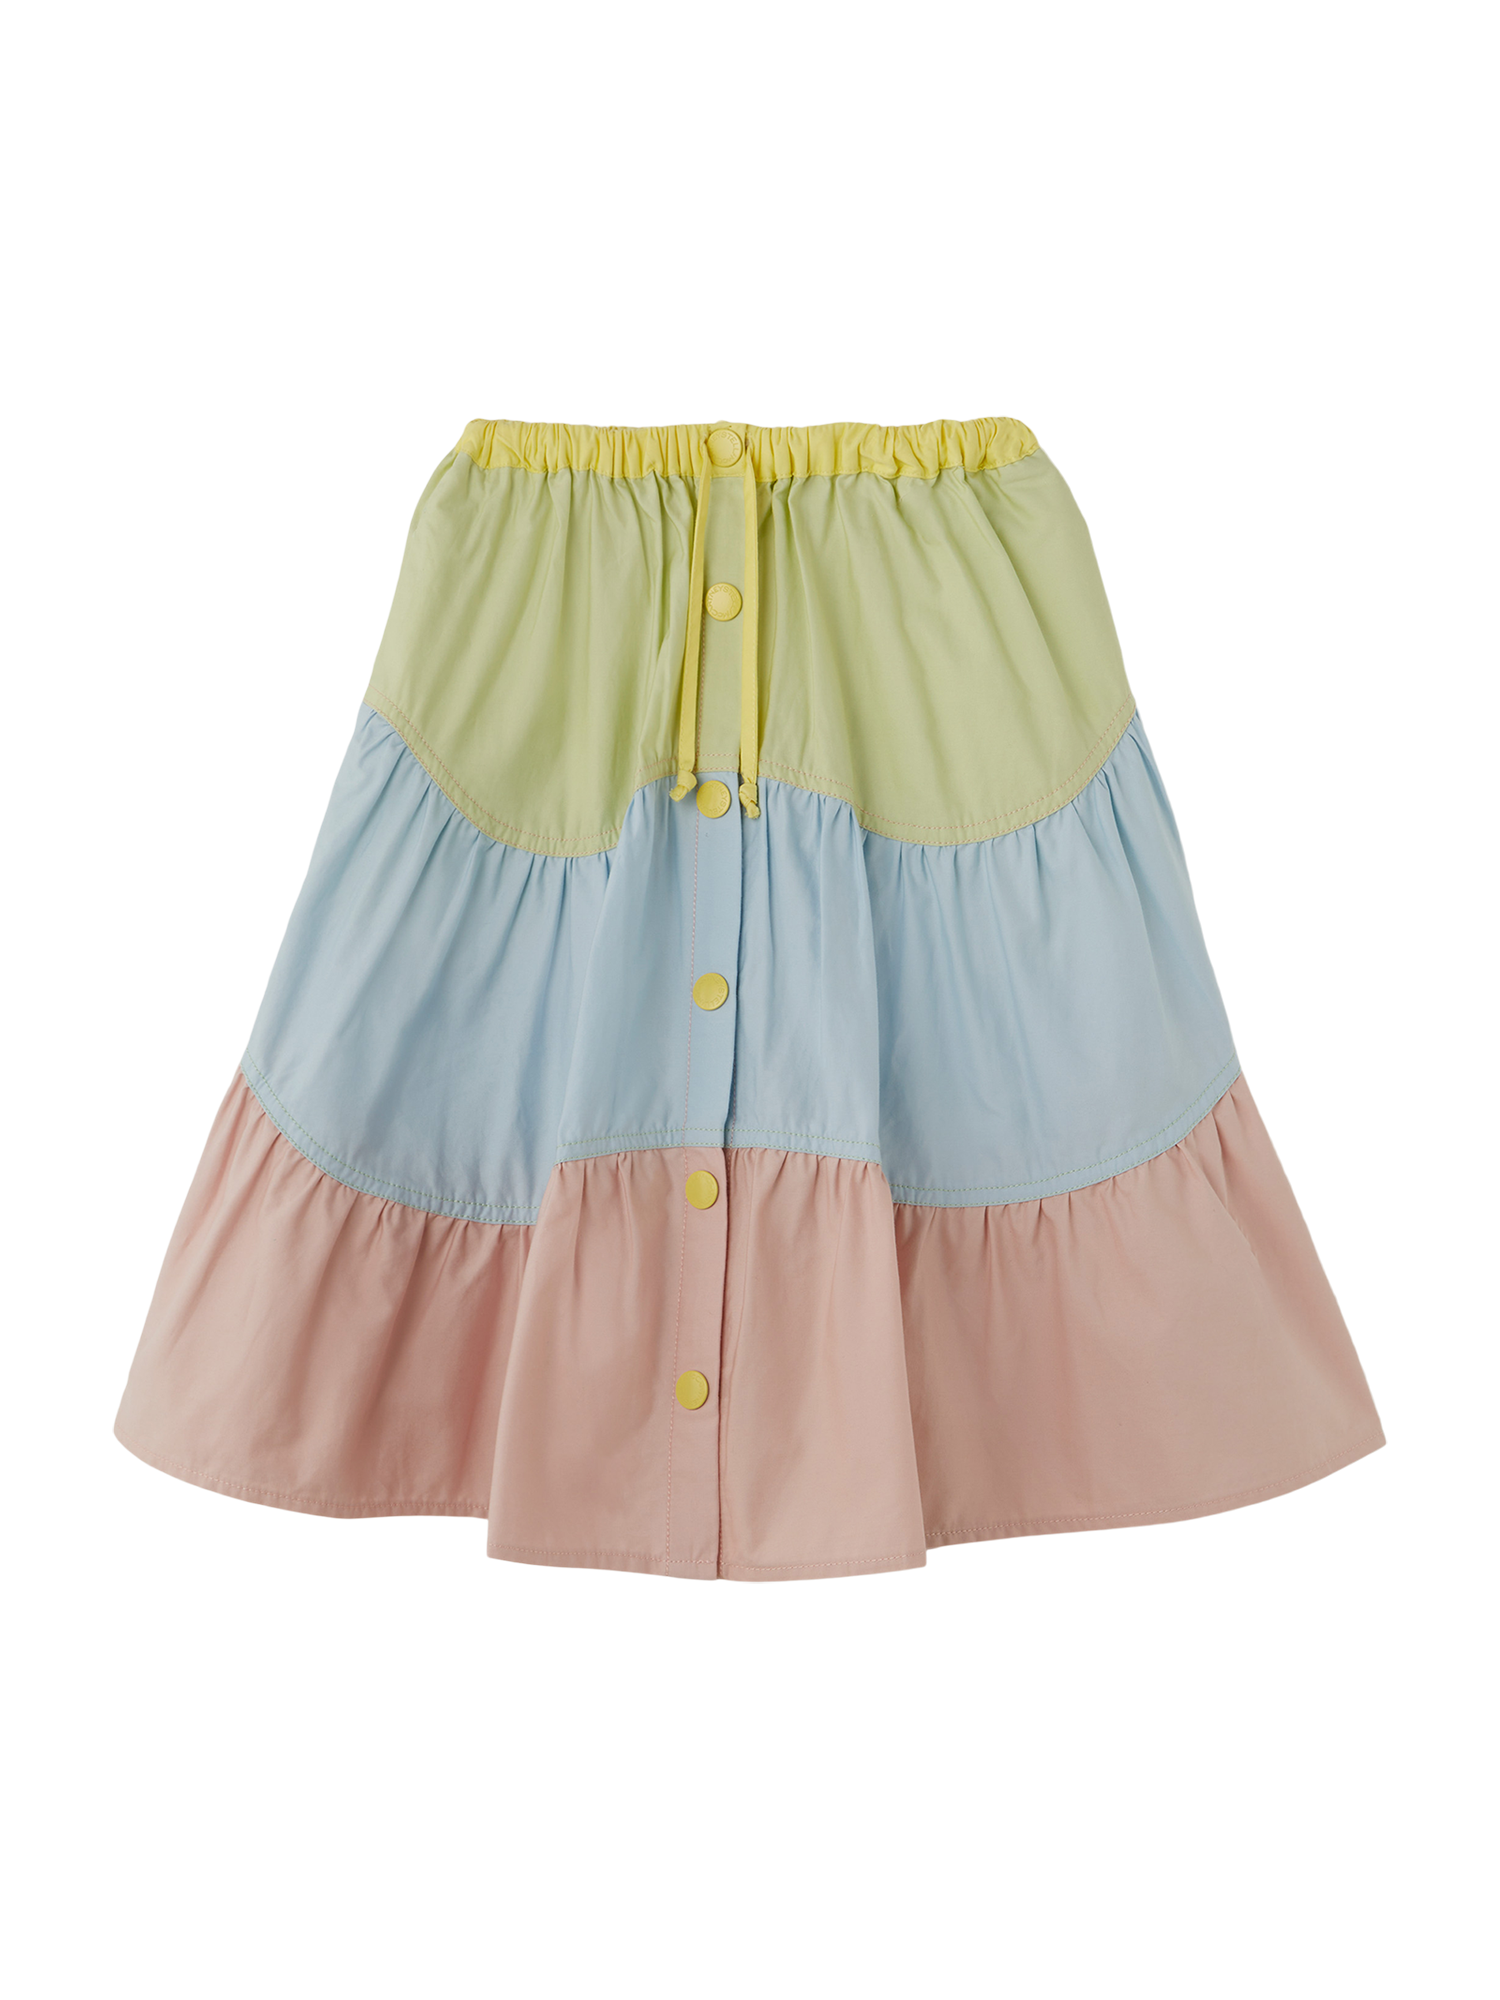 Stella McCartney Colorblock Wave Skirt - Skirts